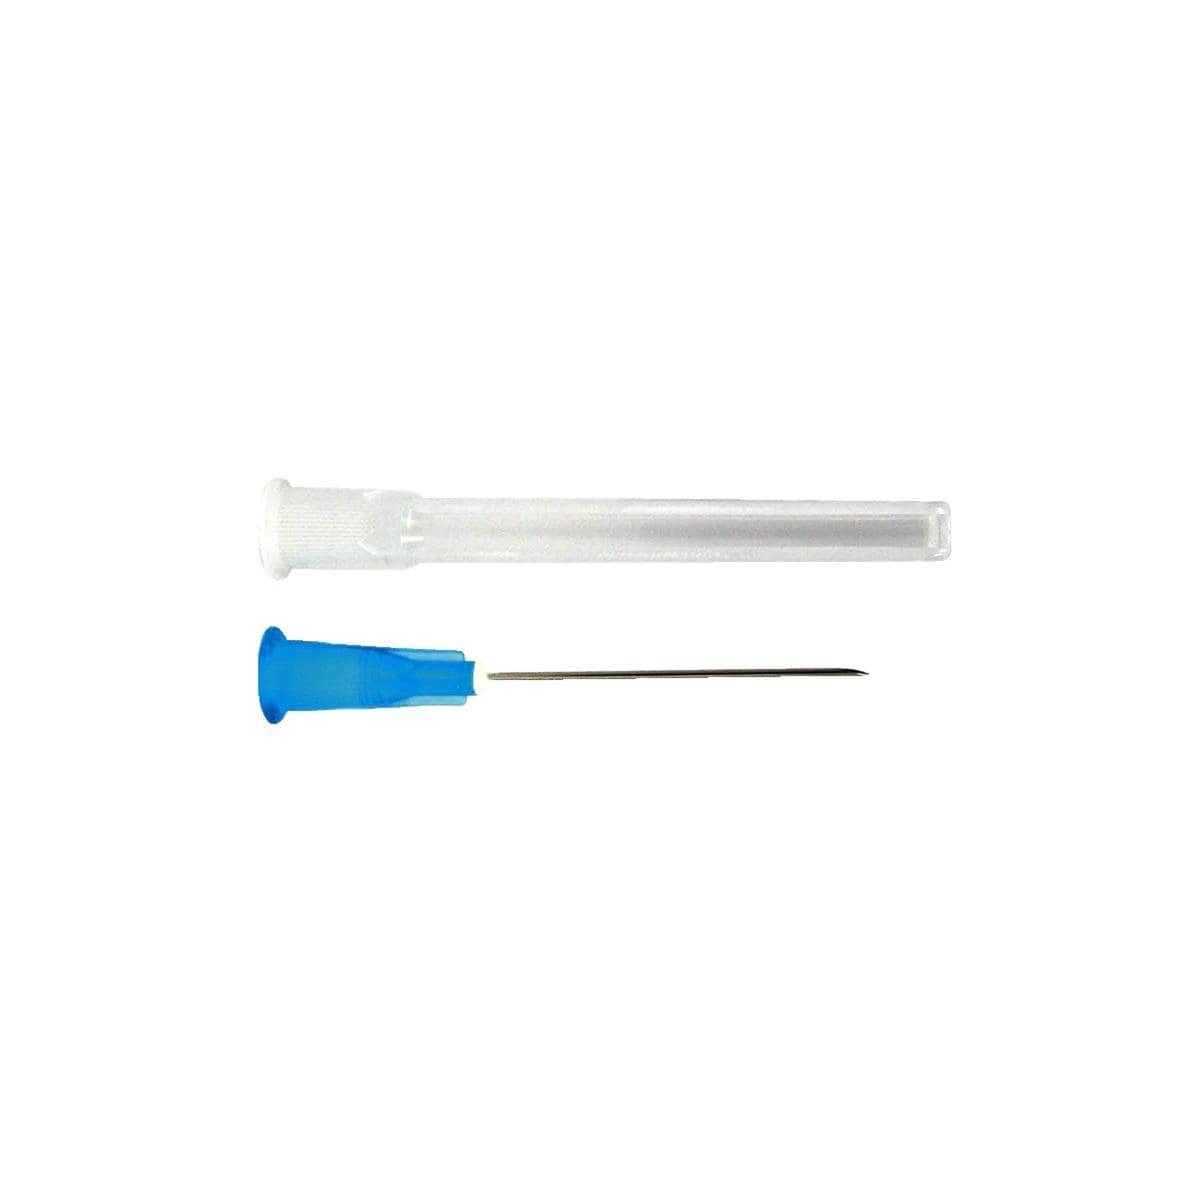 BD Microlance 3 Needle Sterile 23G -1" 100pk